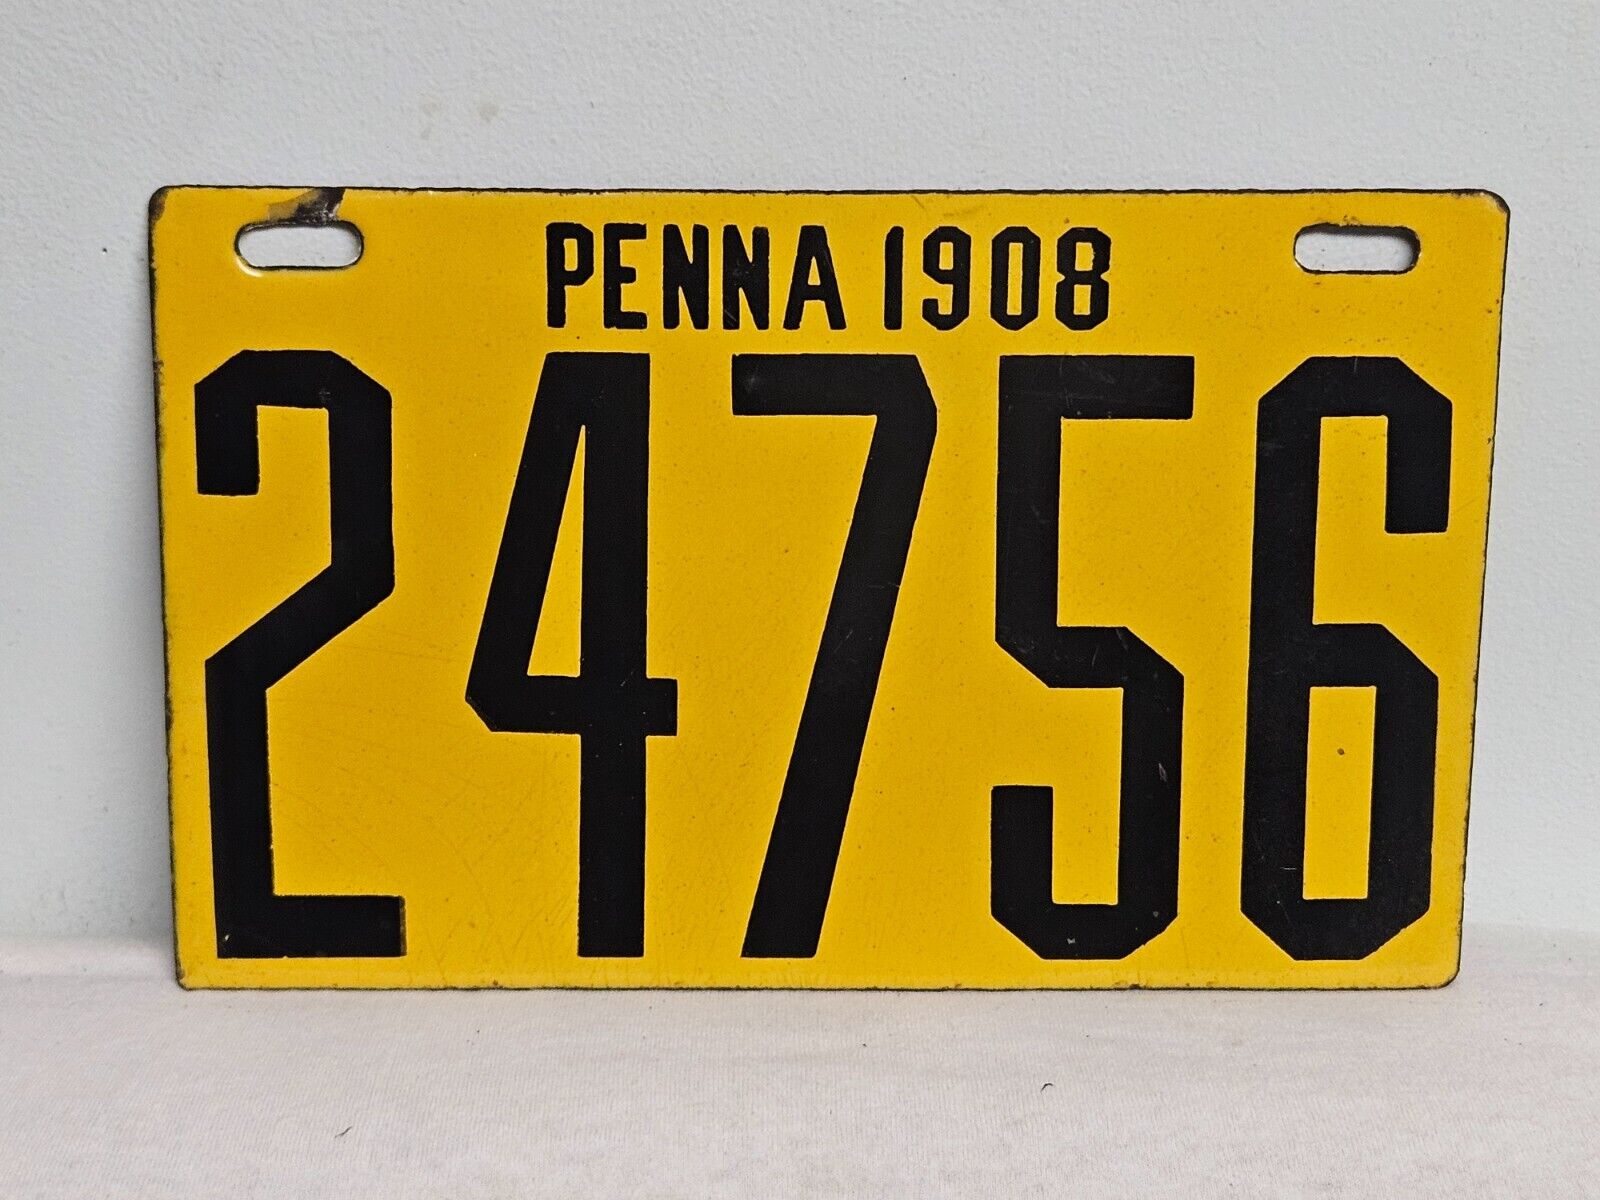 1908 Pennsylvania Porcelain License Plate Excellent Gloss